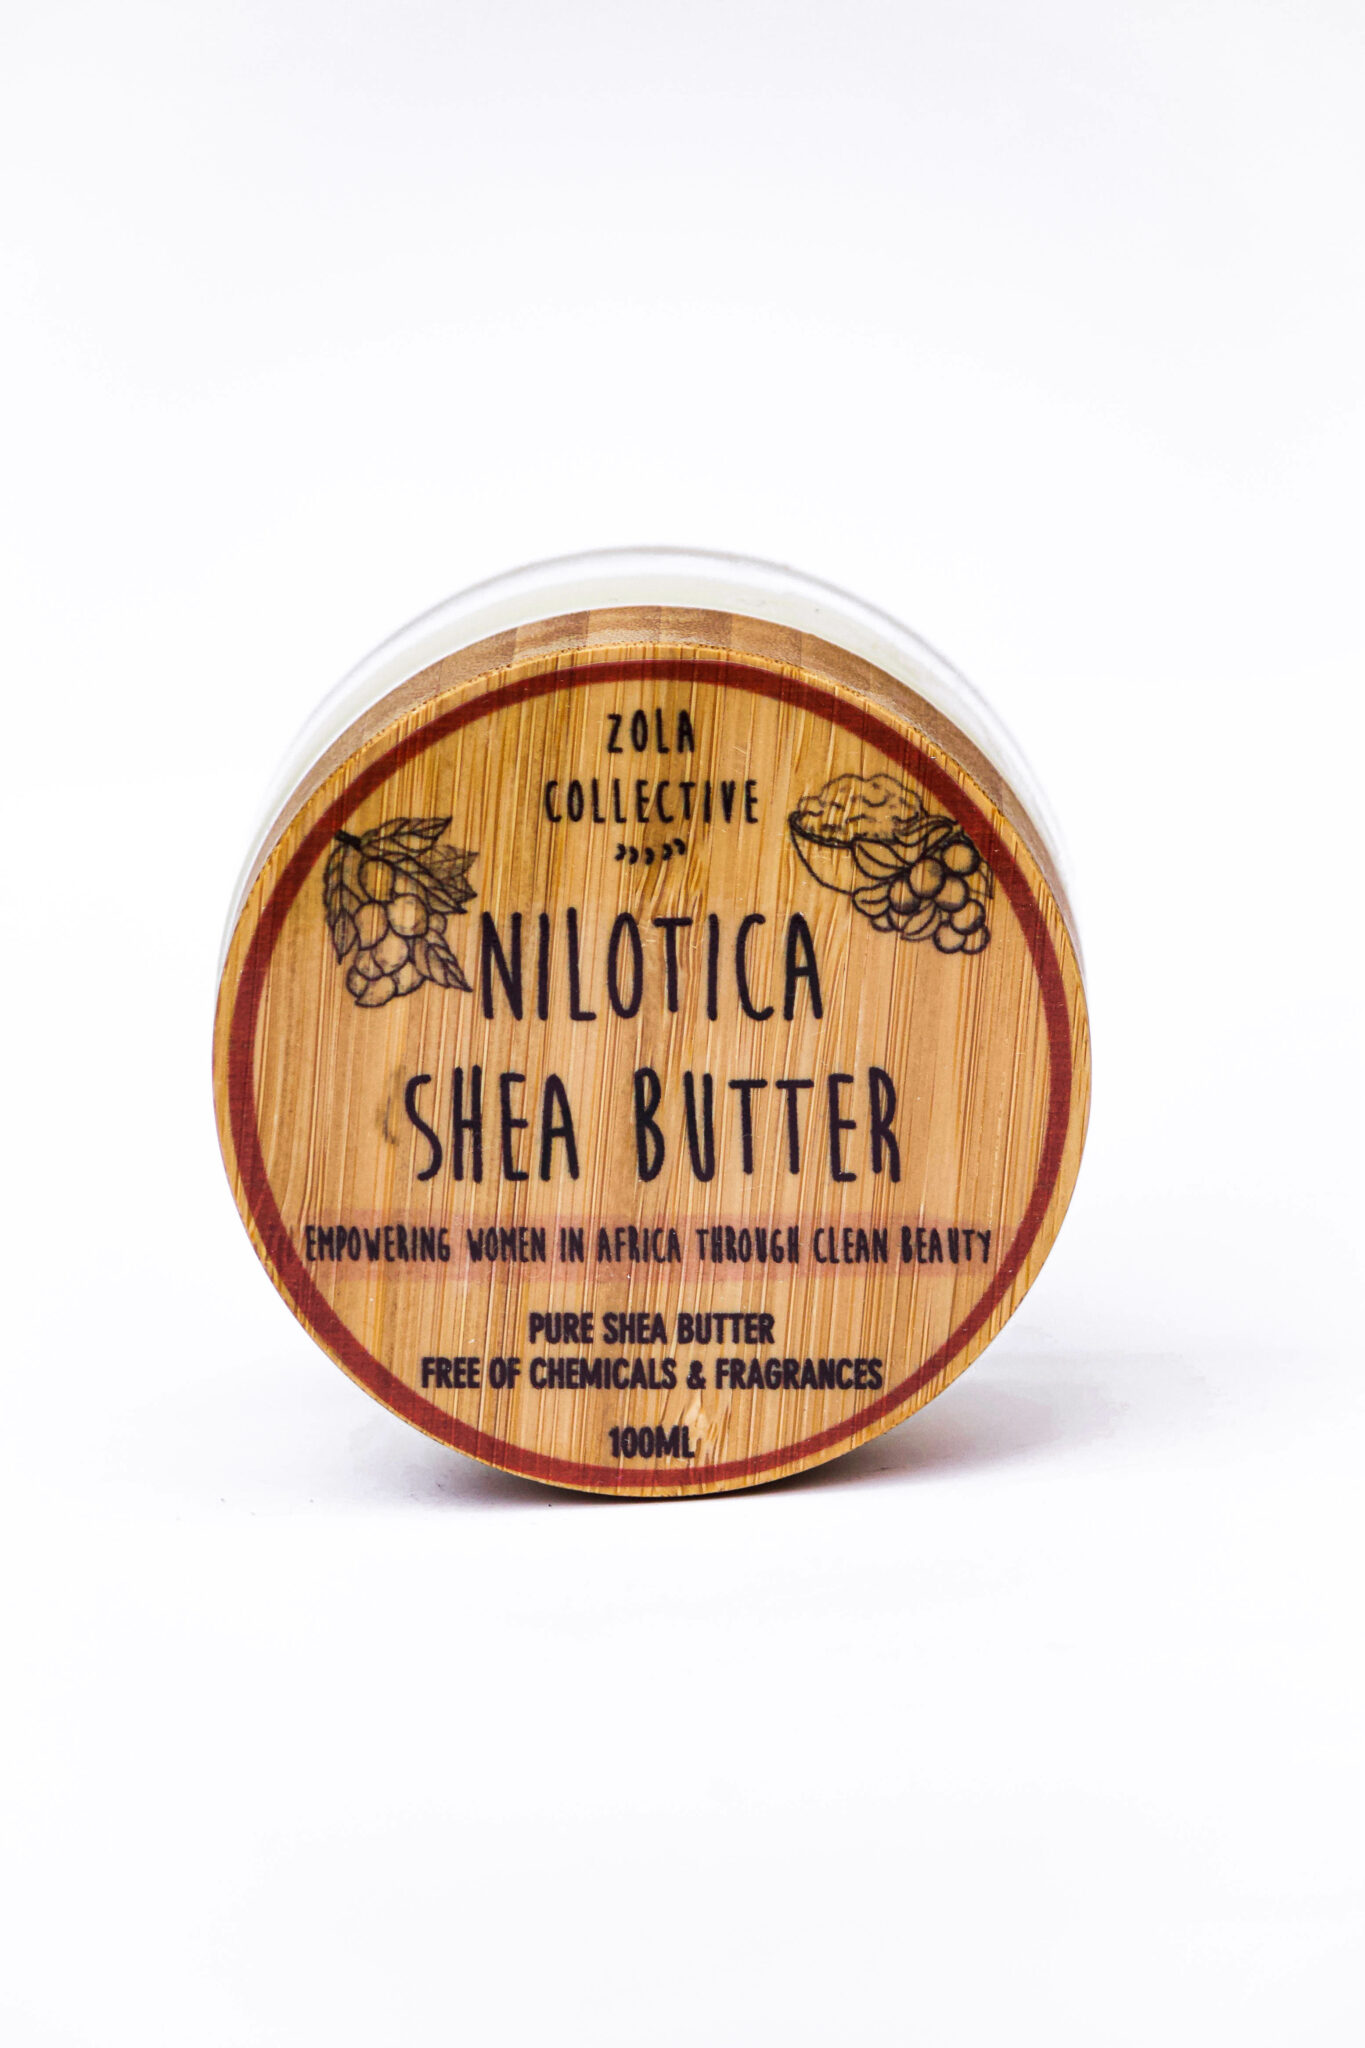 A jar of Nilotica Shea Butter